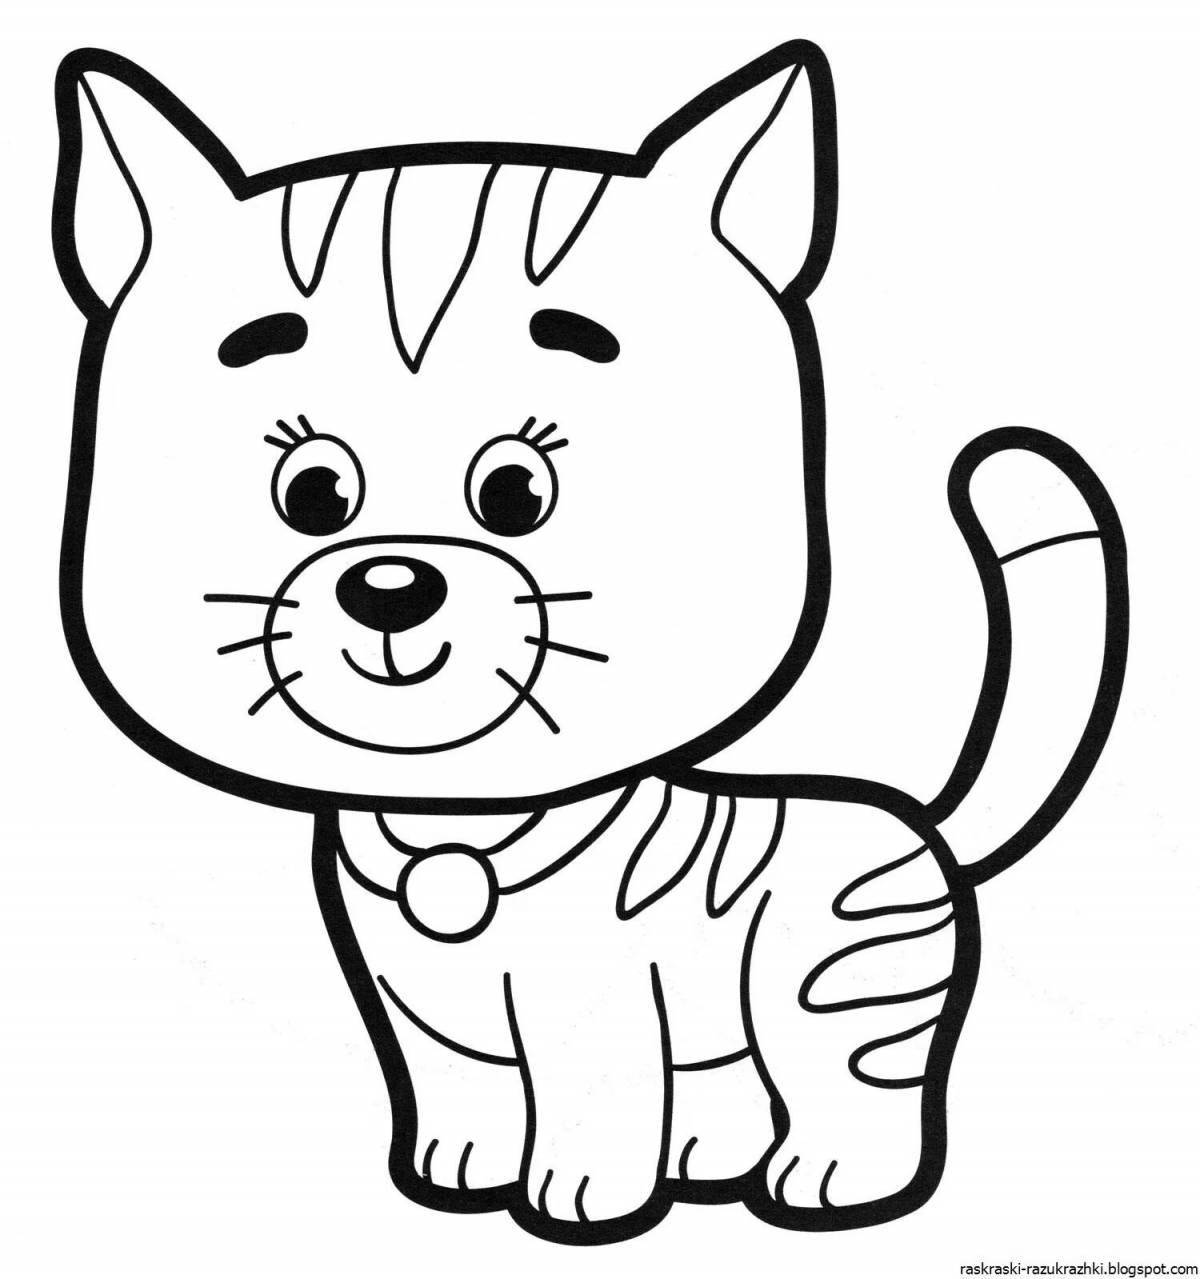 Cute cat coloring book for kids